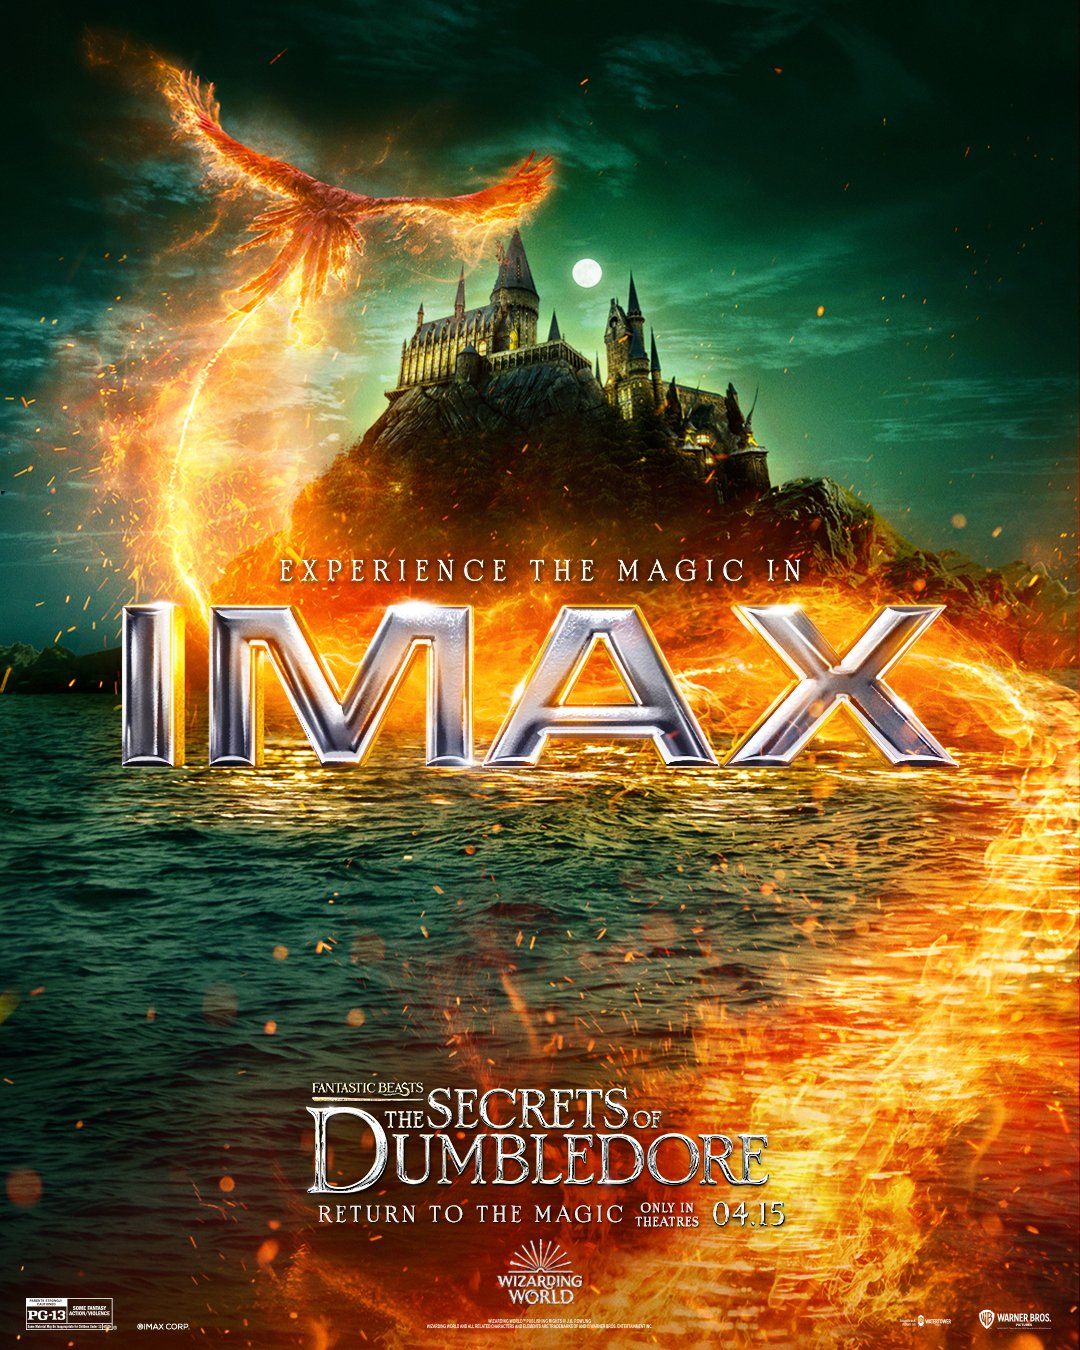 Fantastic Beasts 3 The Secrets of Dumbledore IMAX poster Hogwarts